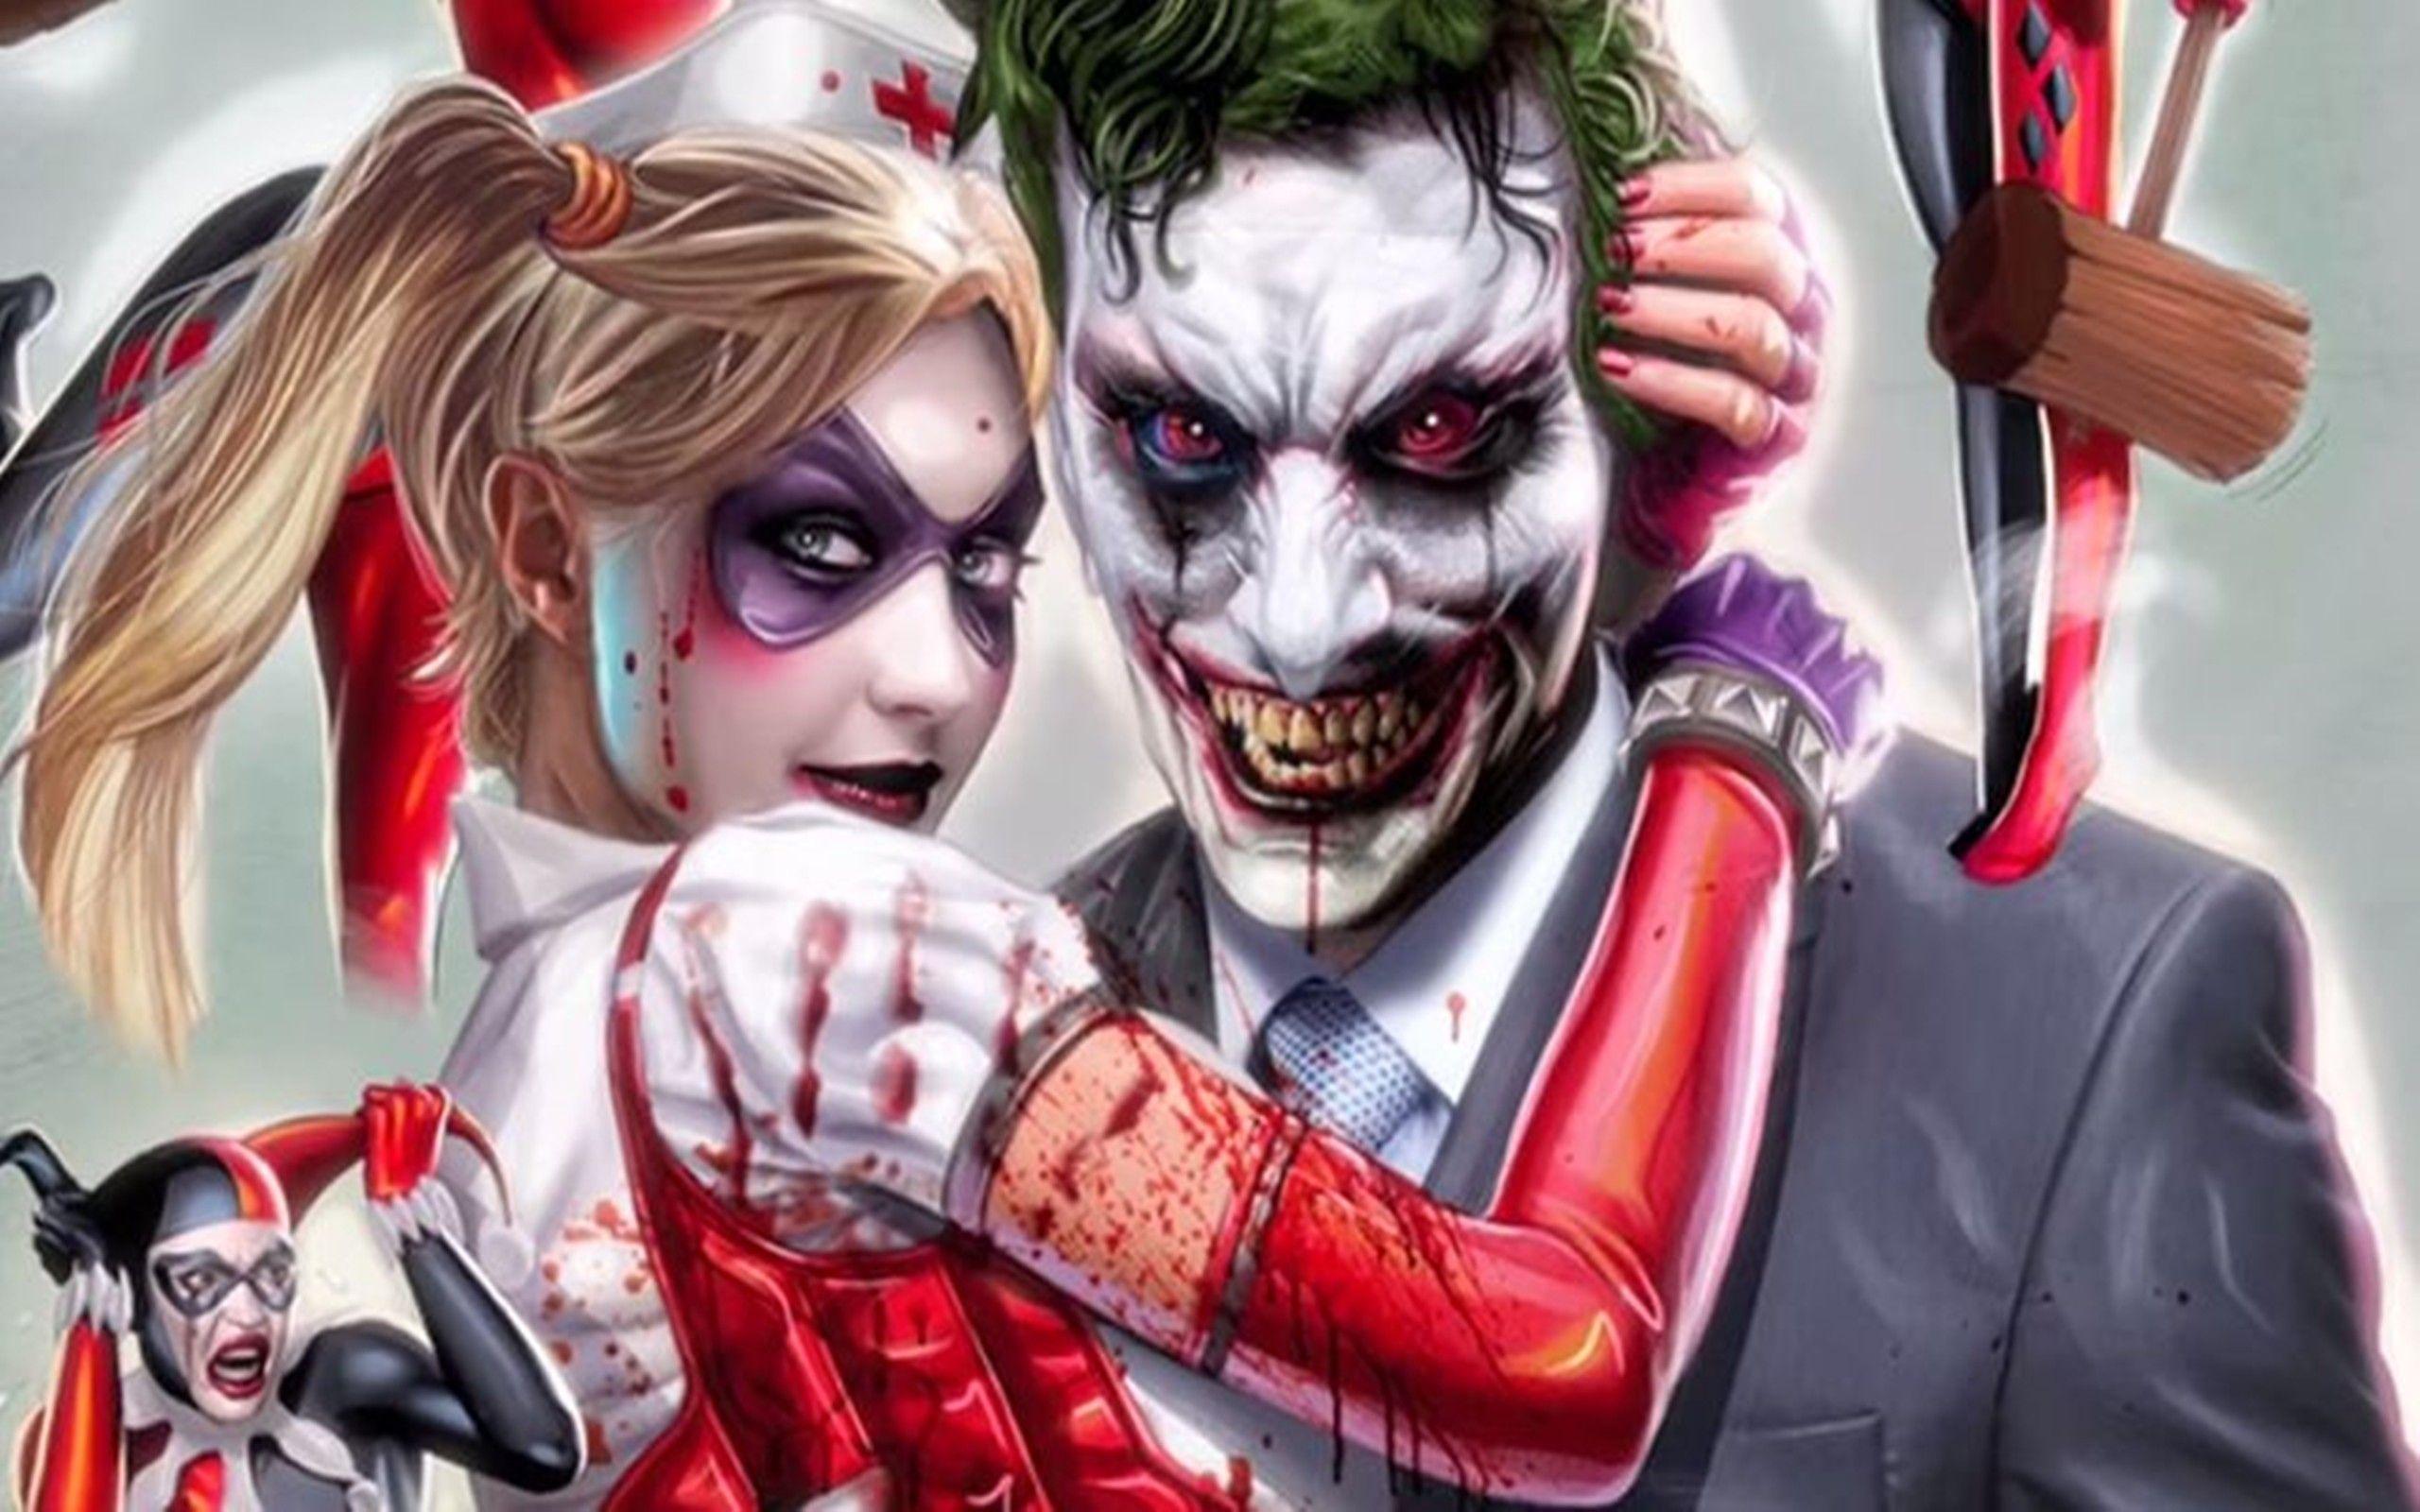 Harley Quinn and Joker wallpapers ·① Download free beautiful full HD